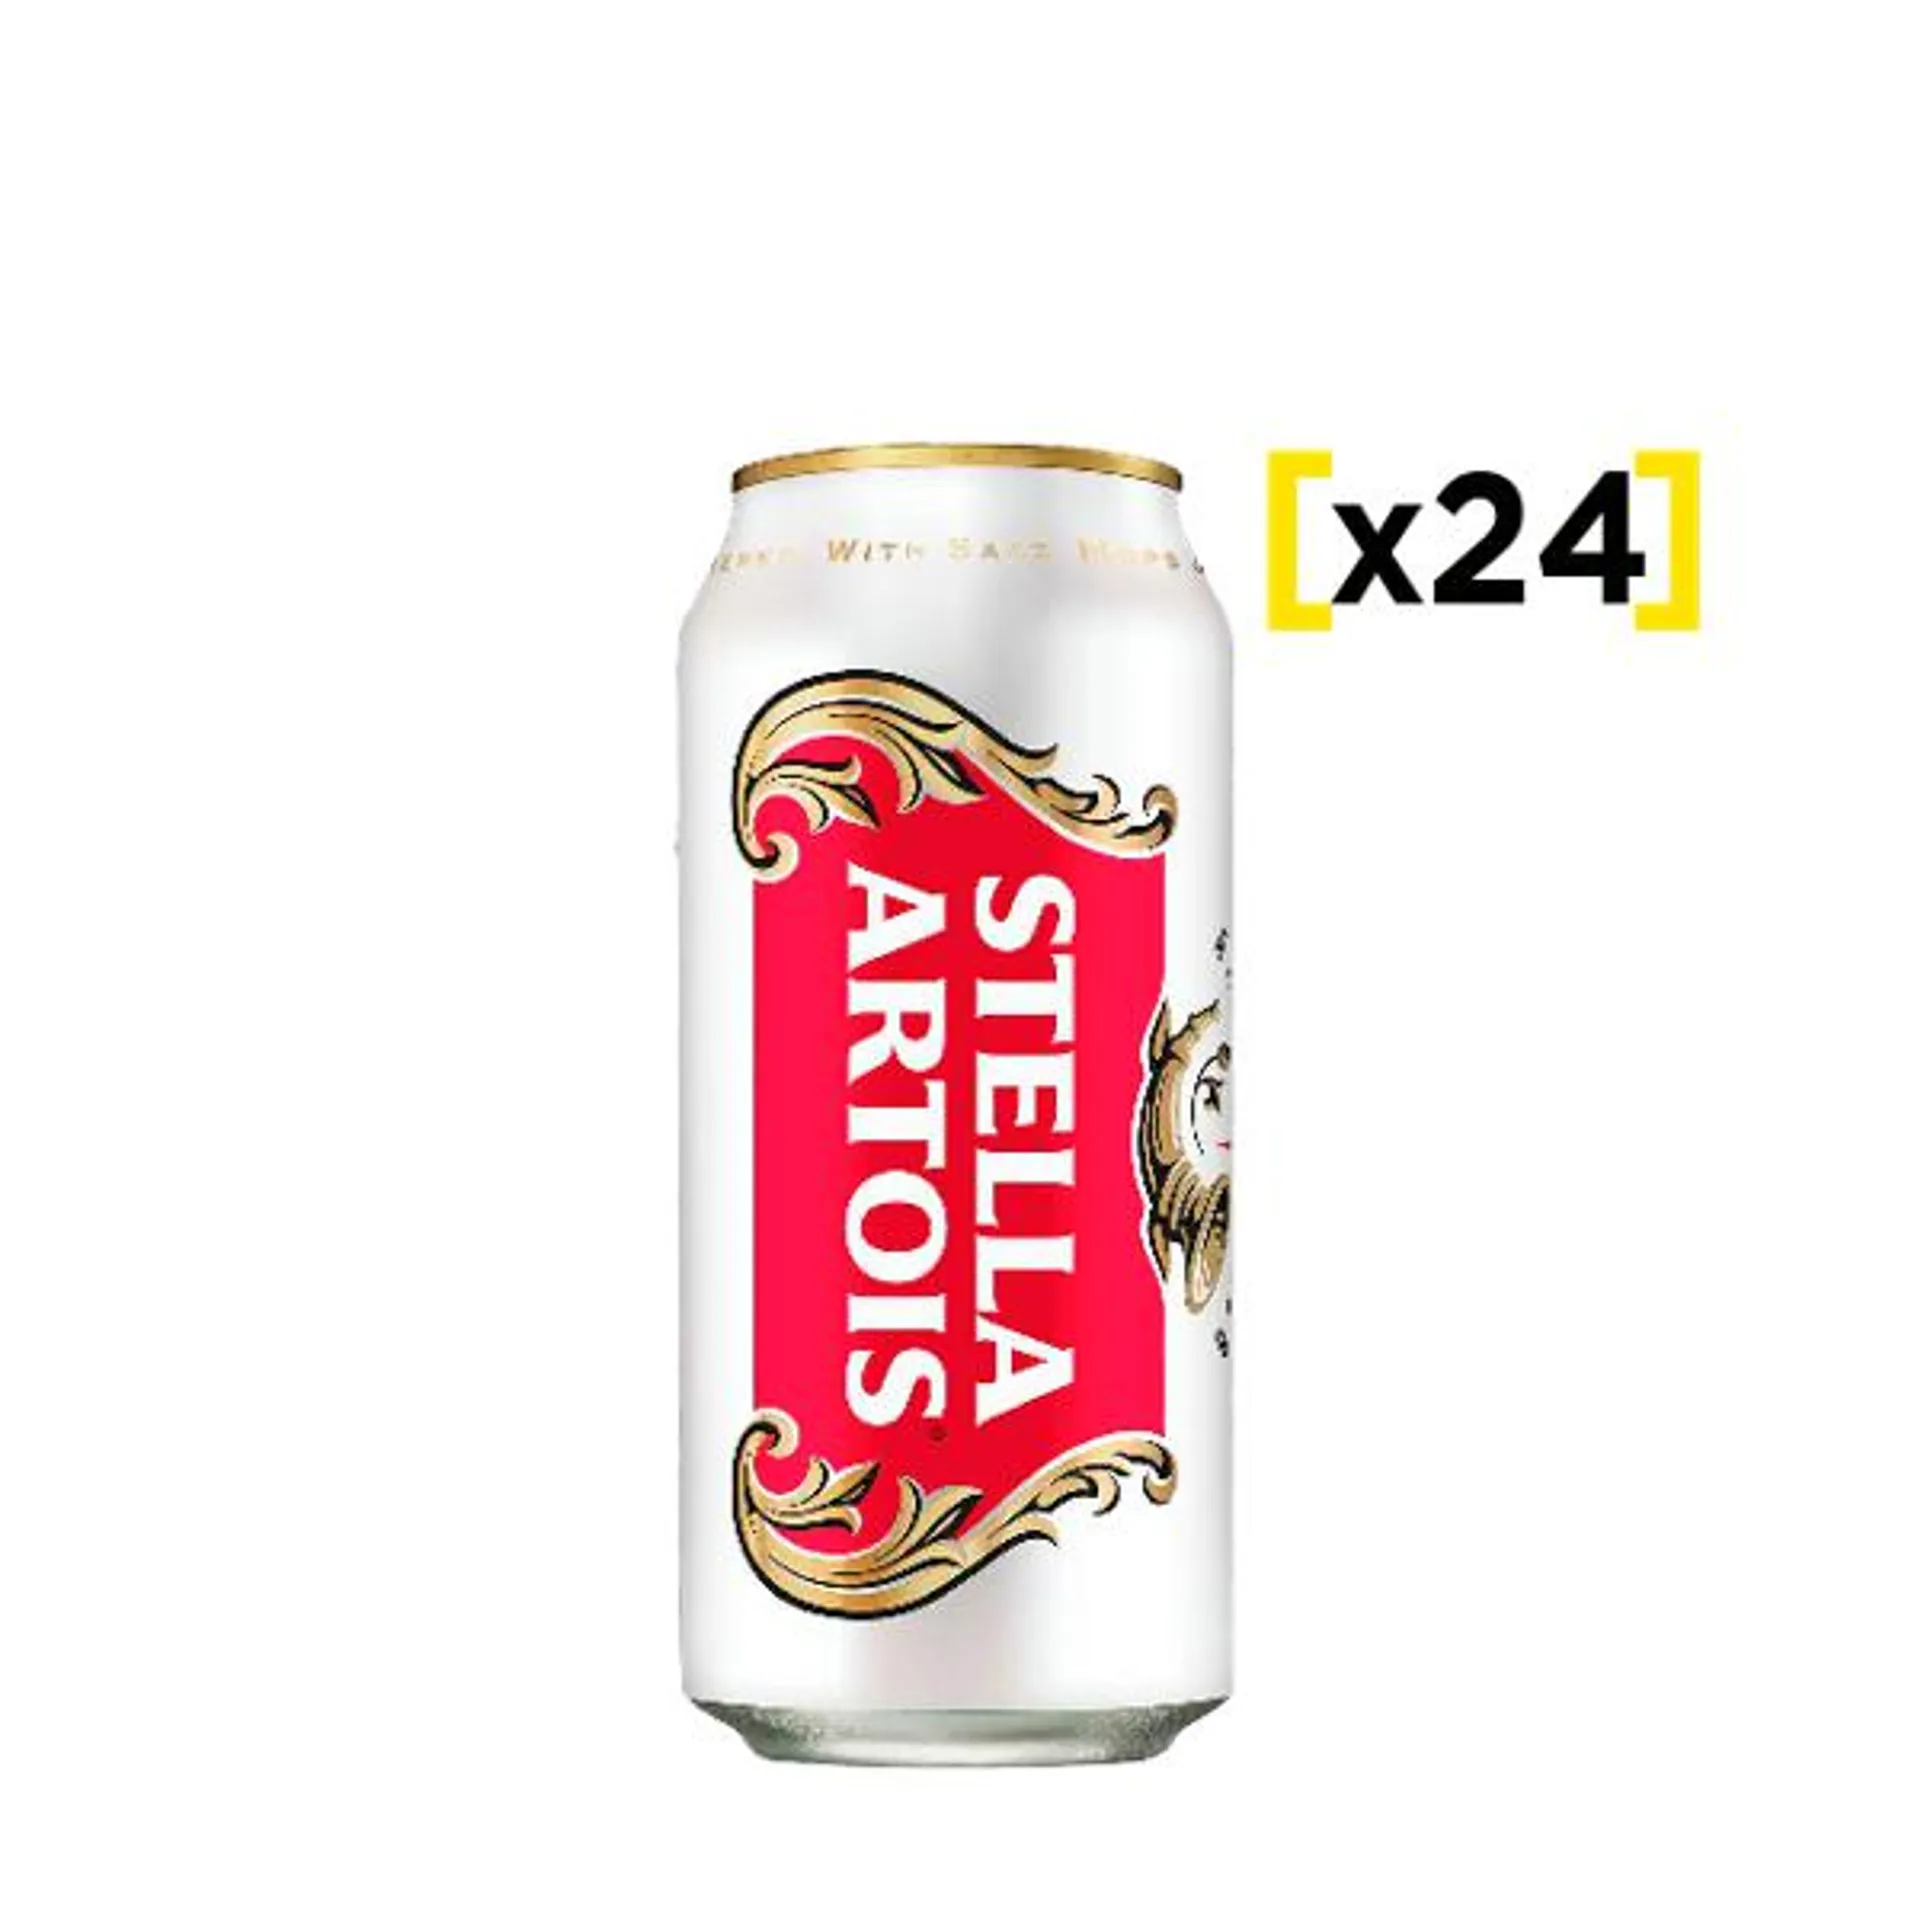 Cerveza Stella Artois lata 473 CC x24 | Liquidos.cl